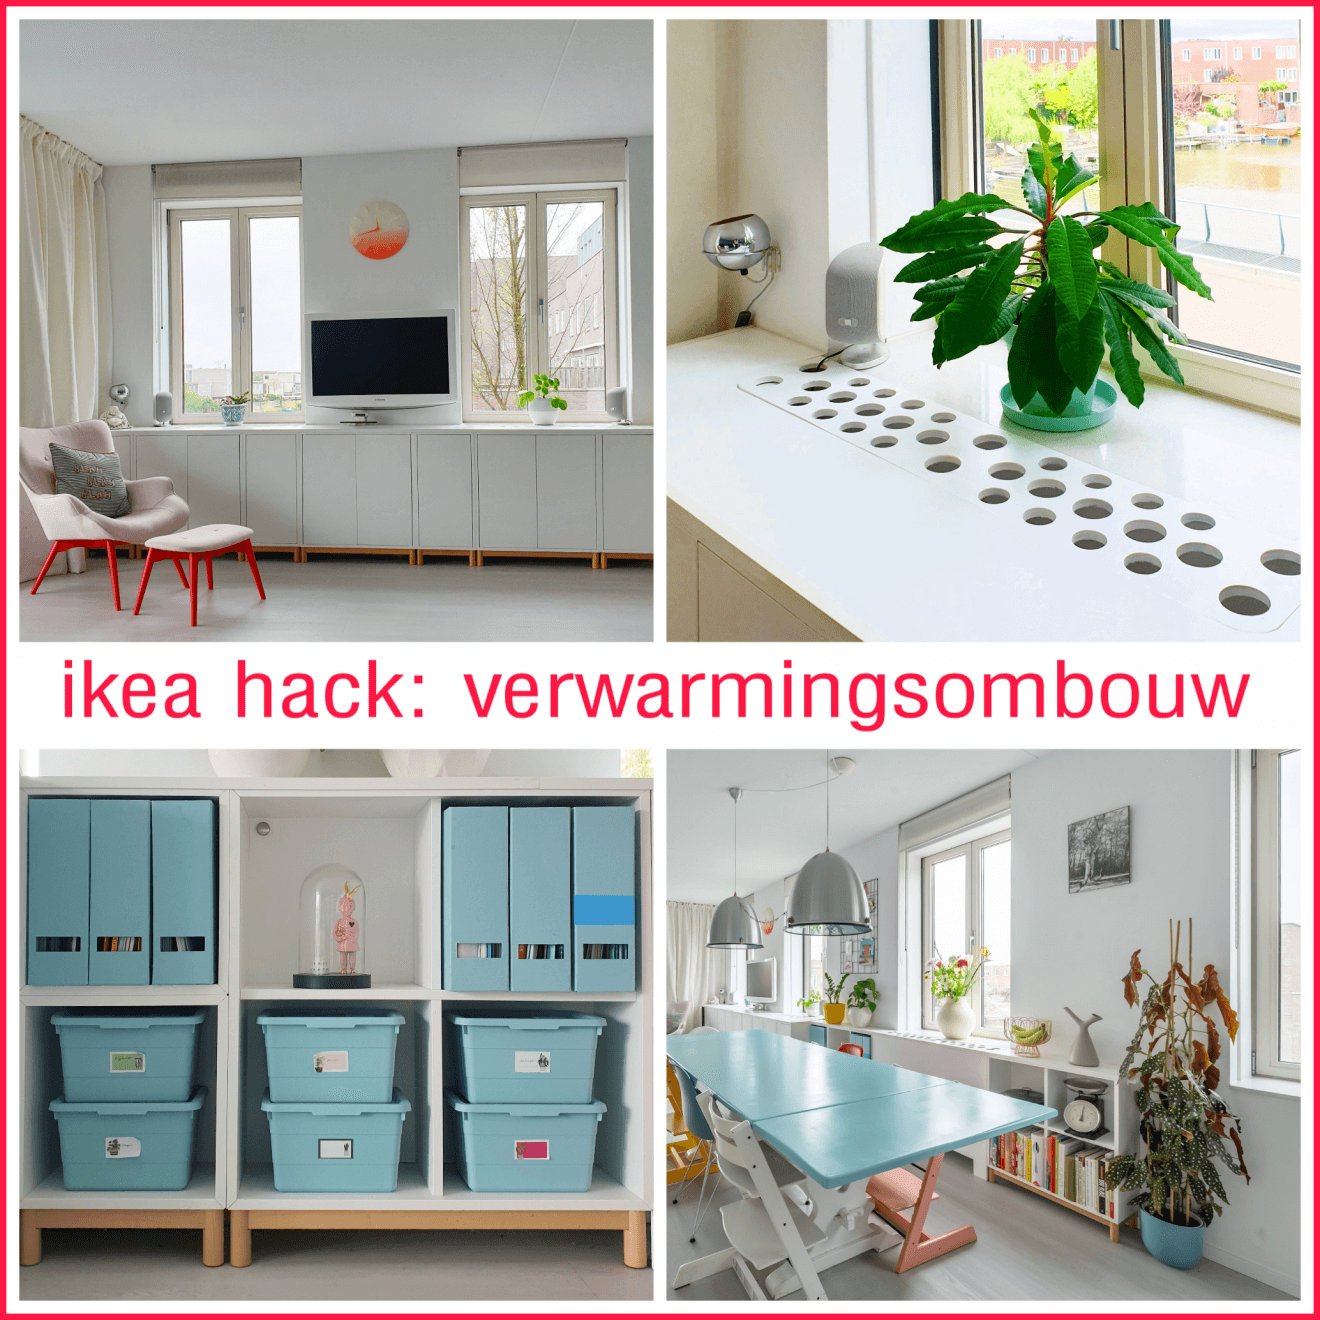 Ikea Hack: Eket verwarmingsombouw en dressoir. Eket heating conversion and sideboard dresser cupboard